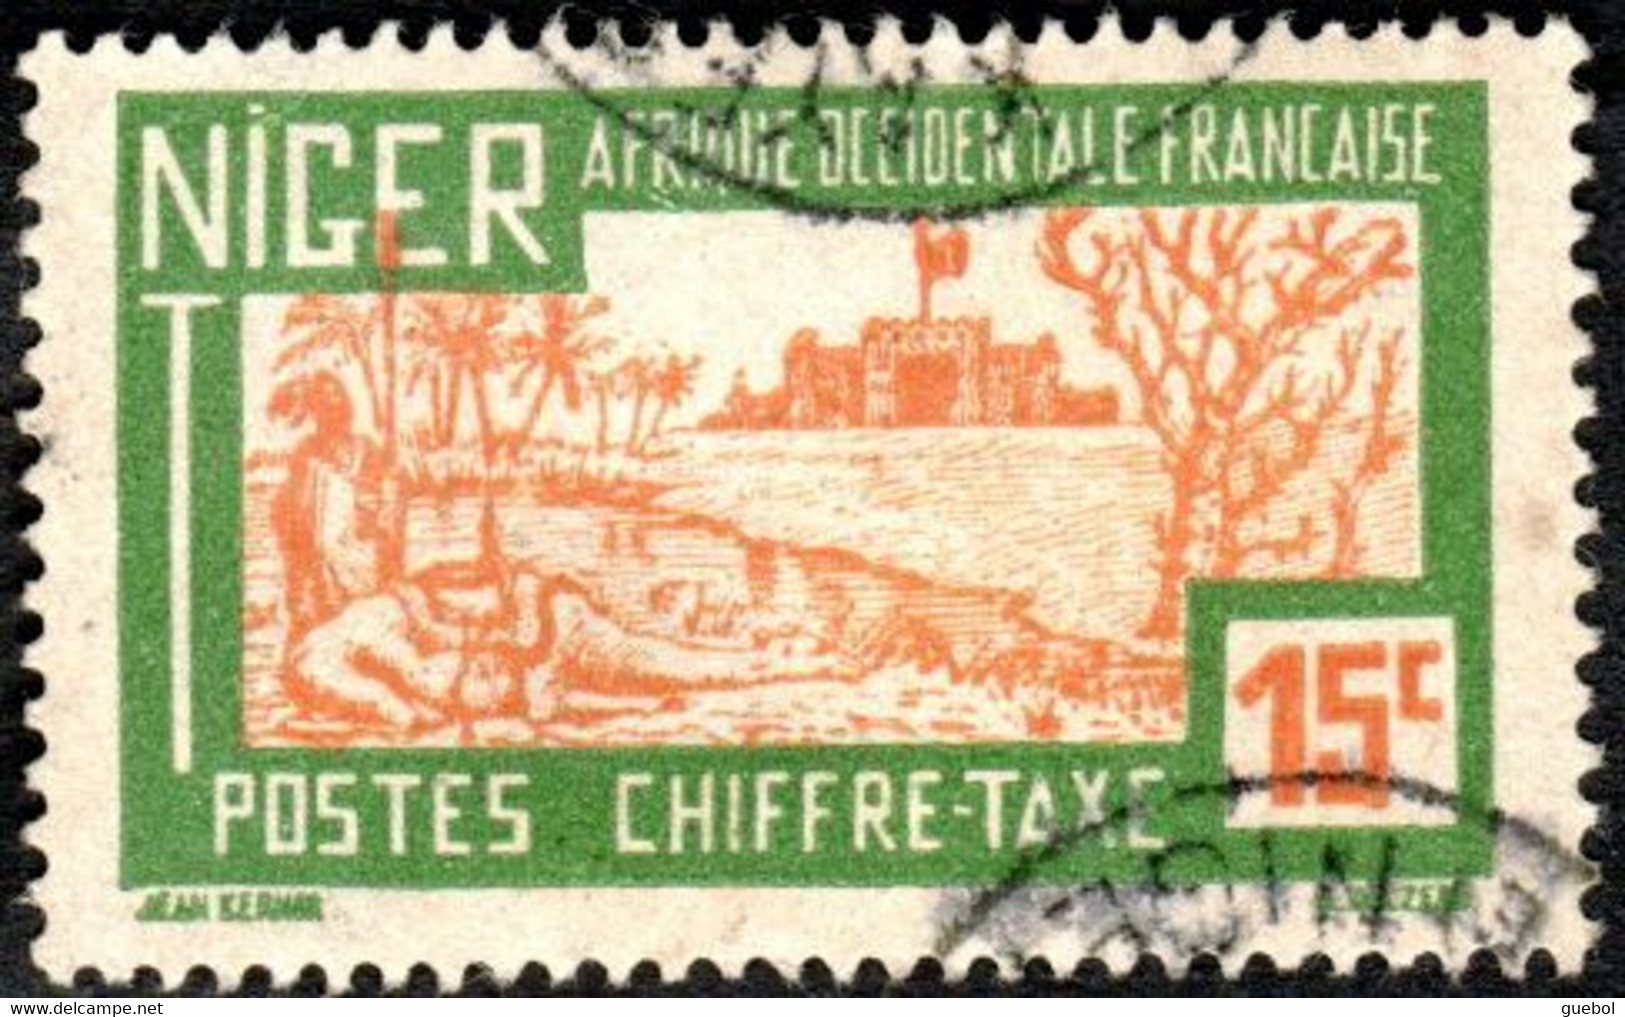 Niger Obl. N° Taxe 13 - Chameau Baraqué Le 15c Vert Et Orange - Used Stamps